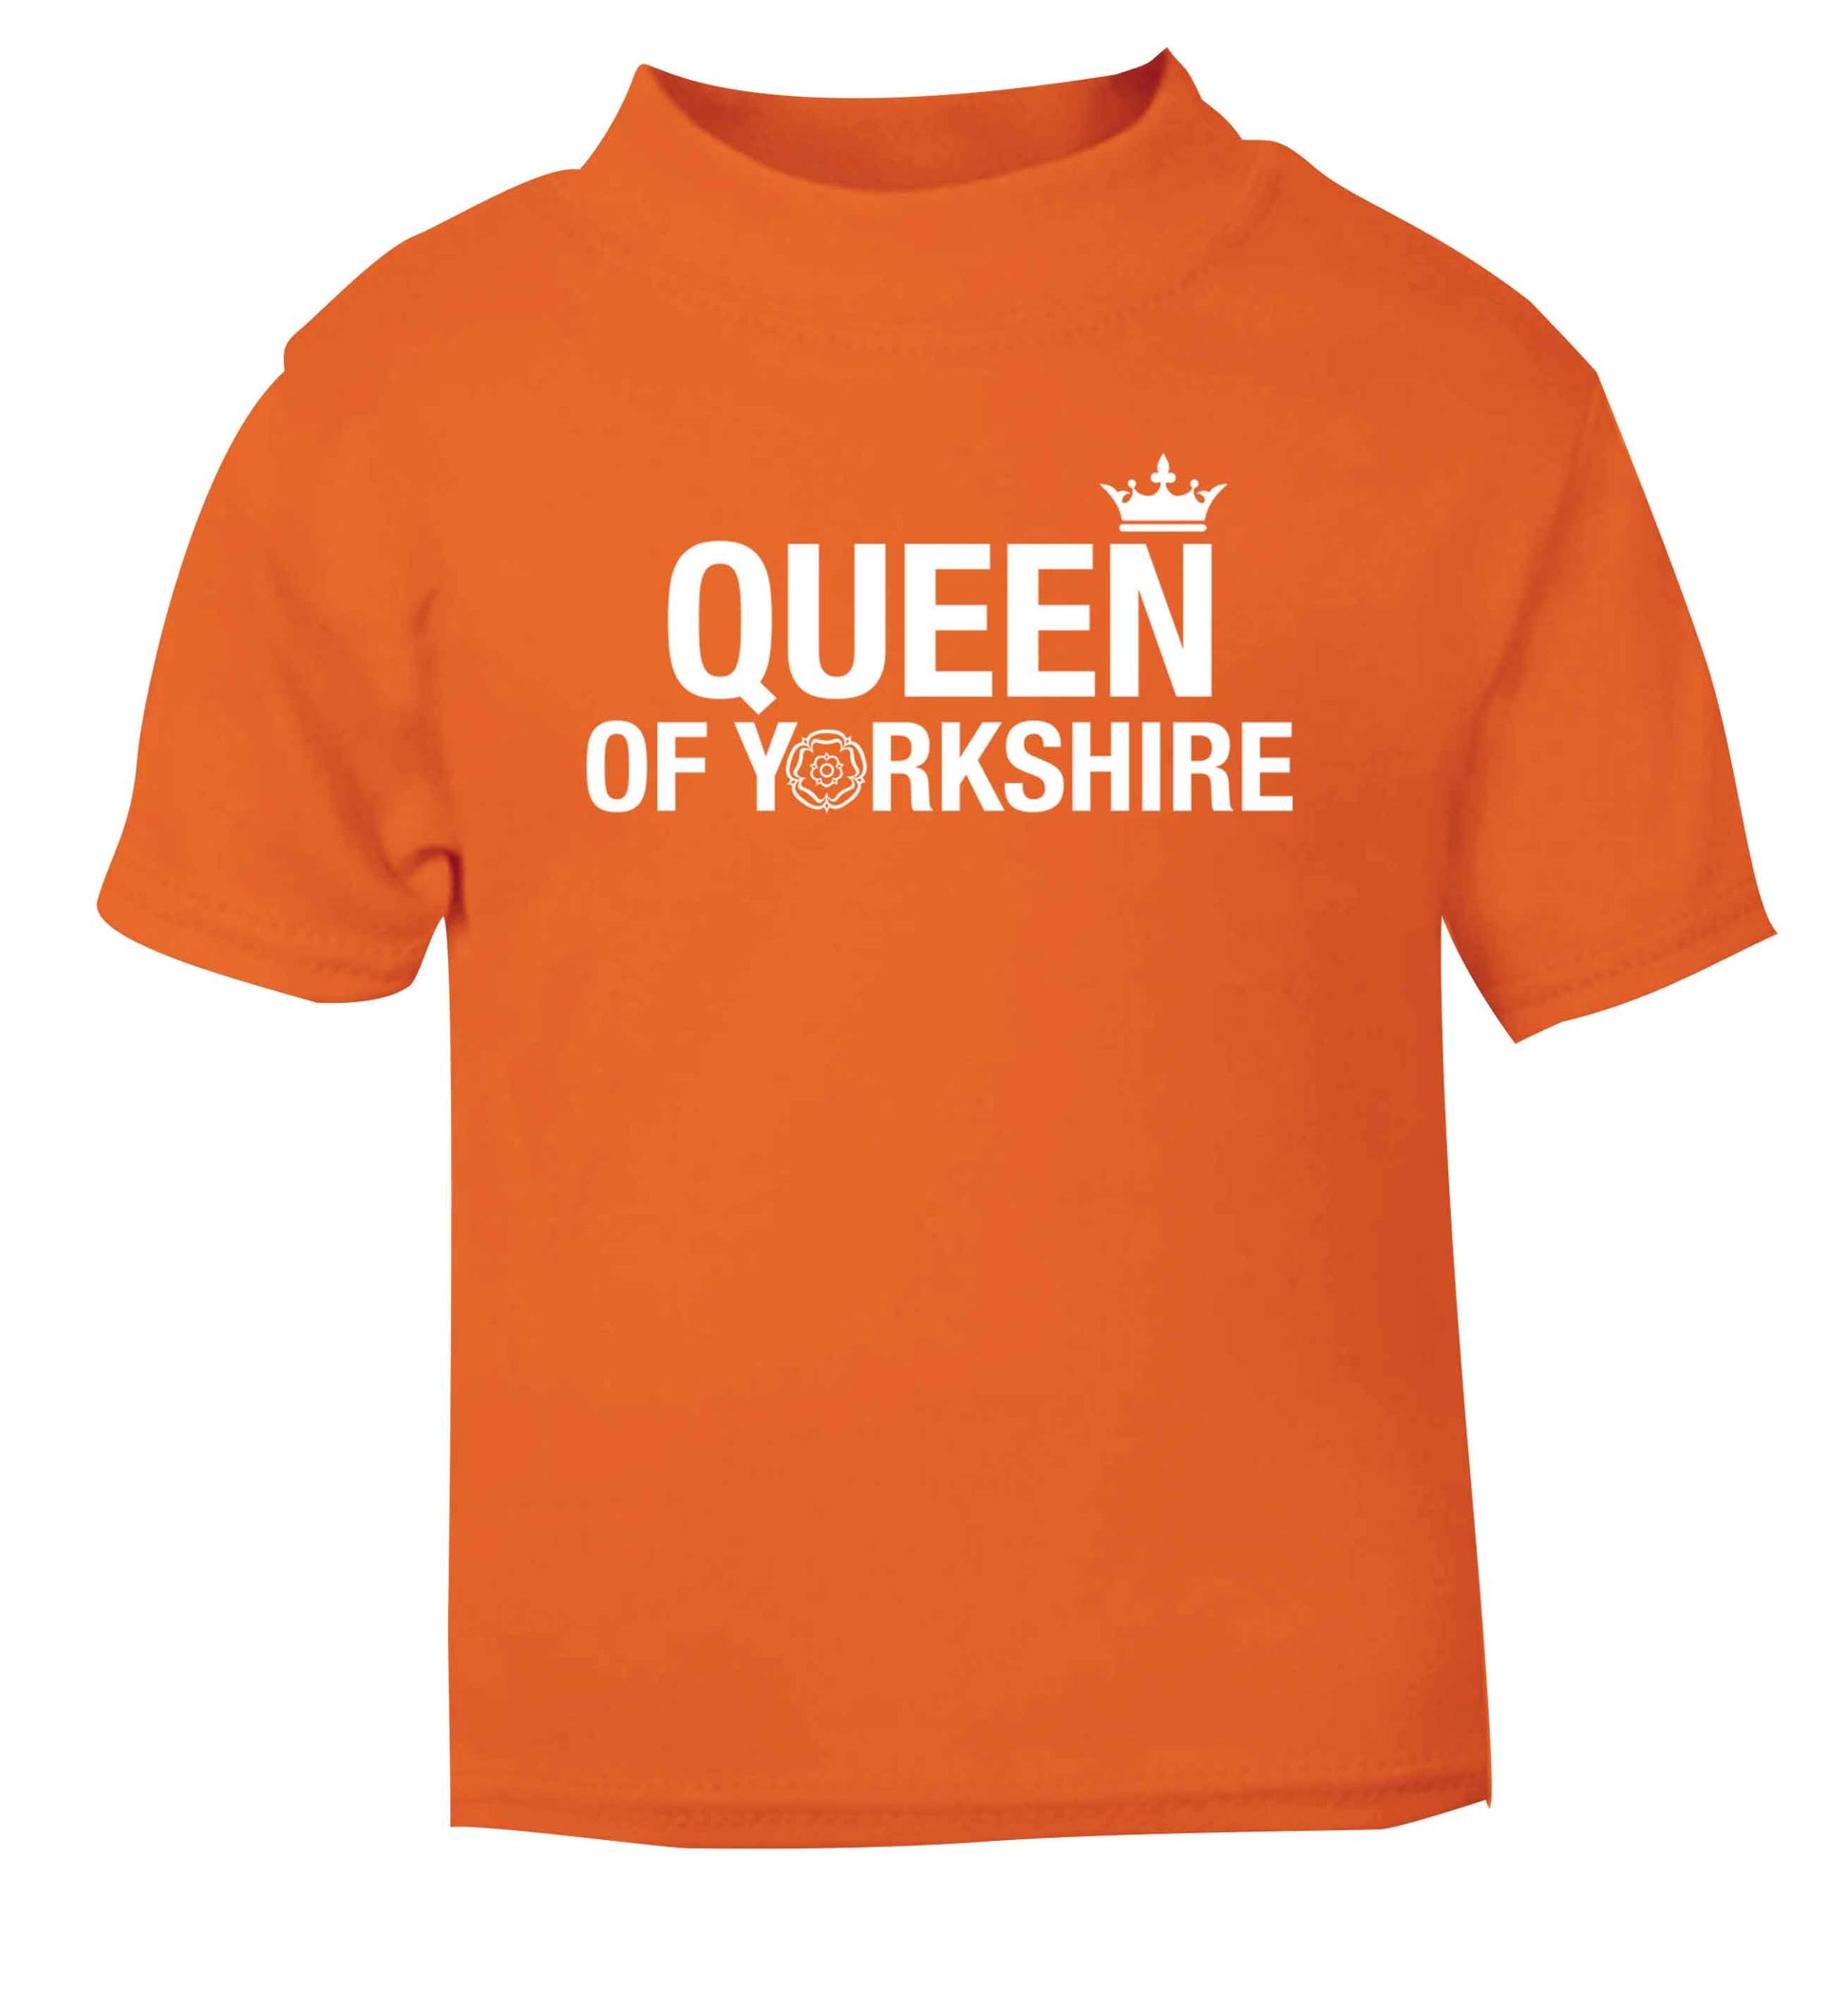 Queen of Yorkshire orange Baby Toddler Tshirt 2 Years